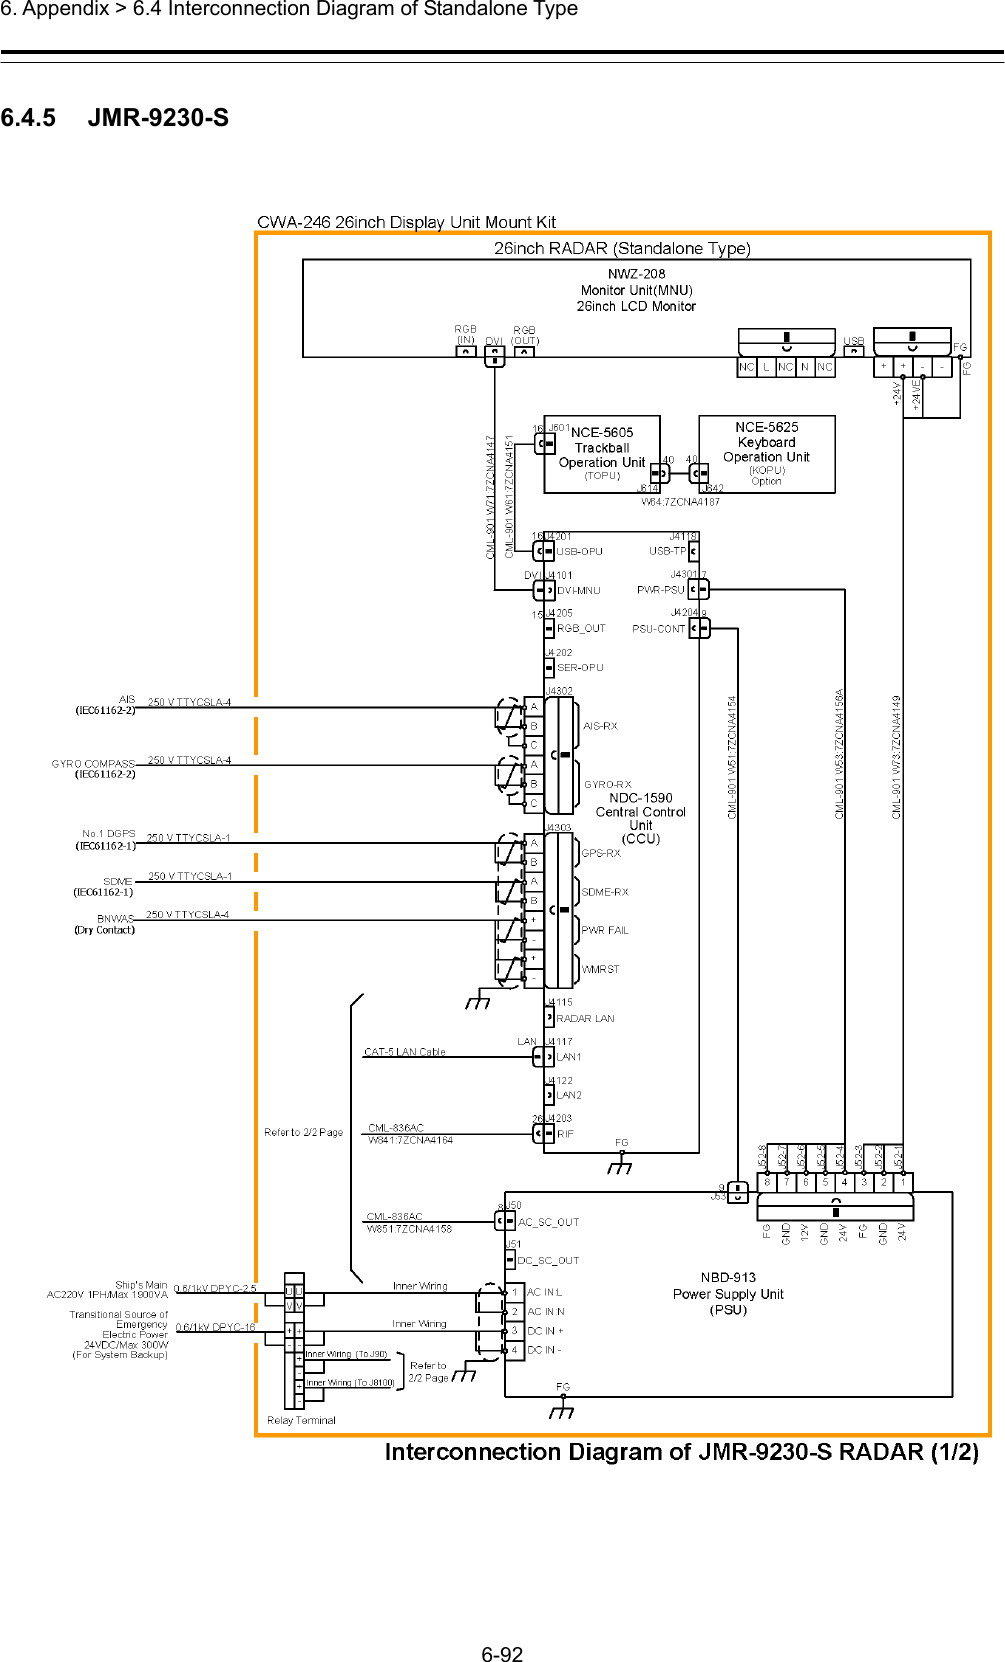  6. Appendix &gt; 6.4 Interconnection Diagram of Standalone Type 6-92  6.4.5   JMR-9230-S 